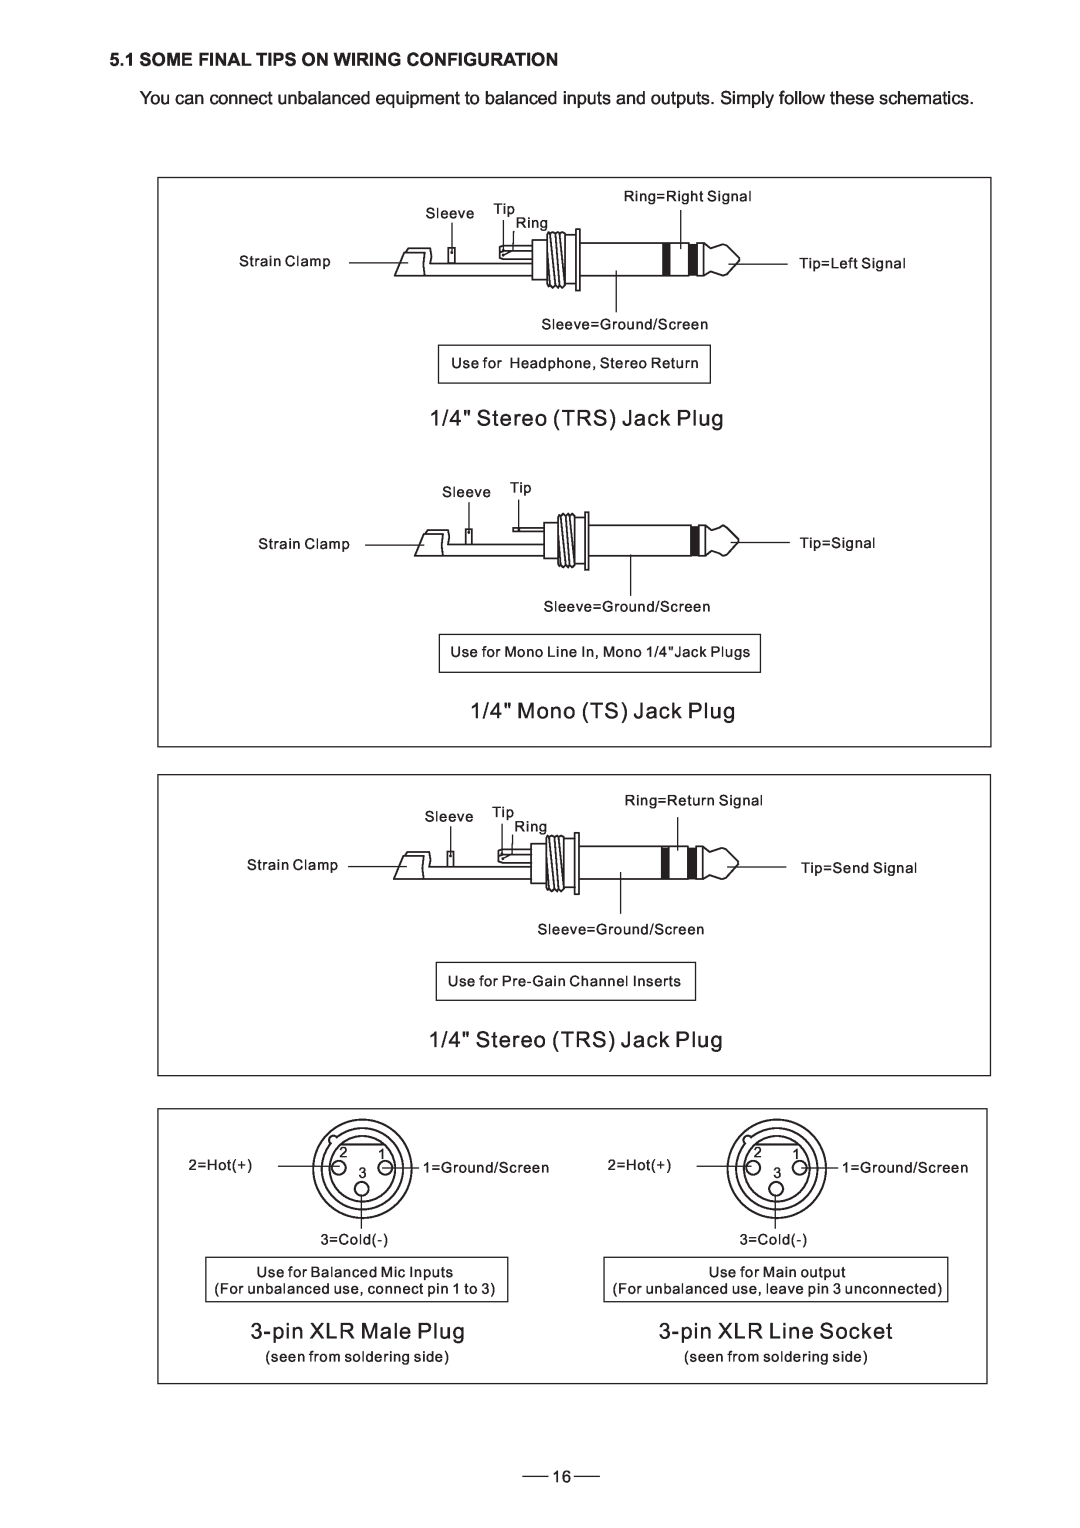 Nilfisk-ALTO AMX-140FX user manual 1/4 Stereo TRS Jack Plug, 1/4 Mono TS Jack Plug, pinXLR Male Plug, pinXLR Line Socket 